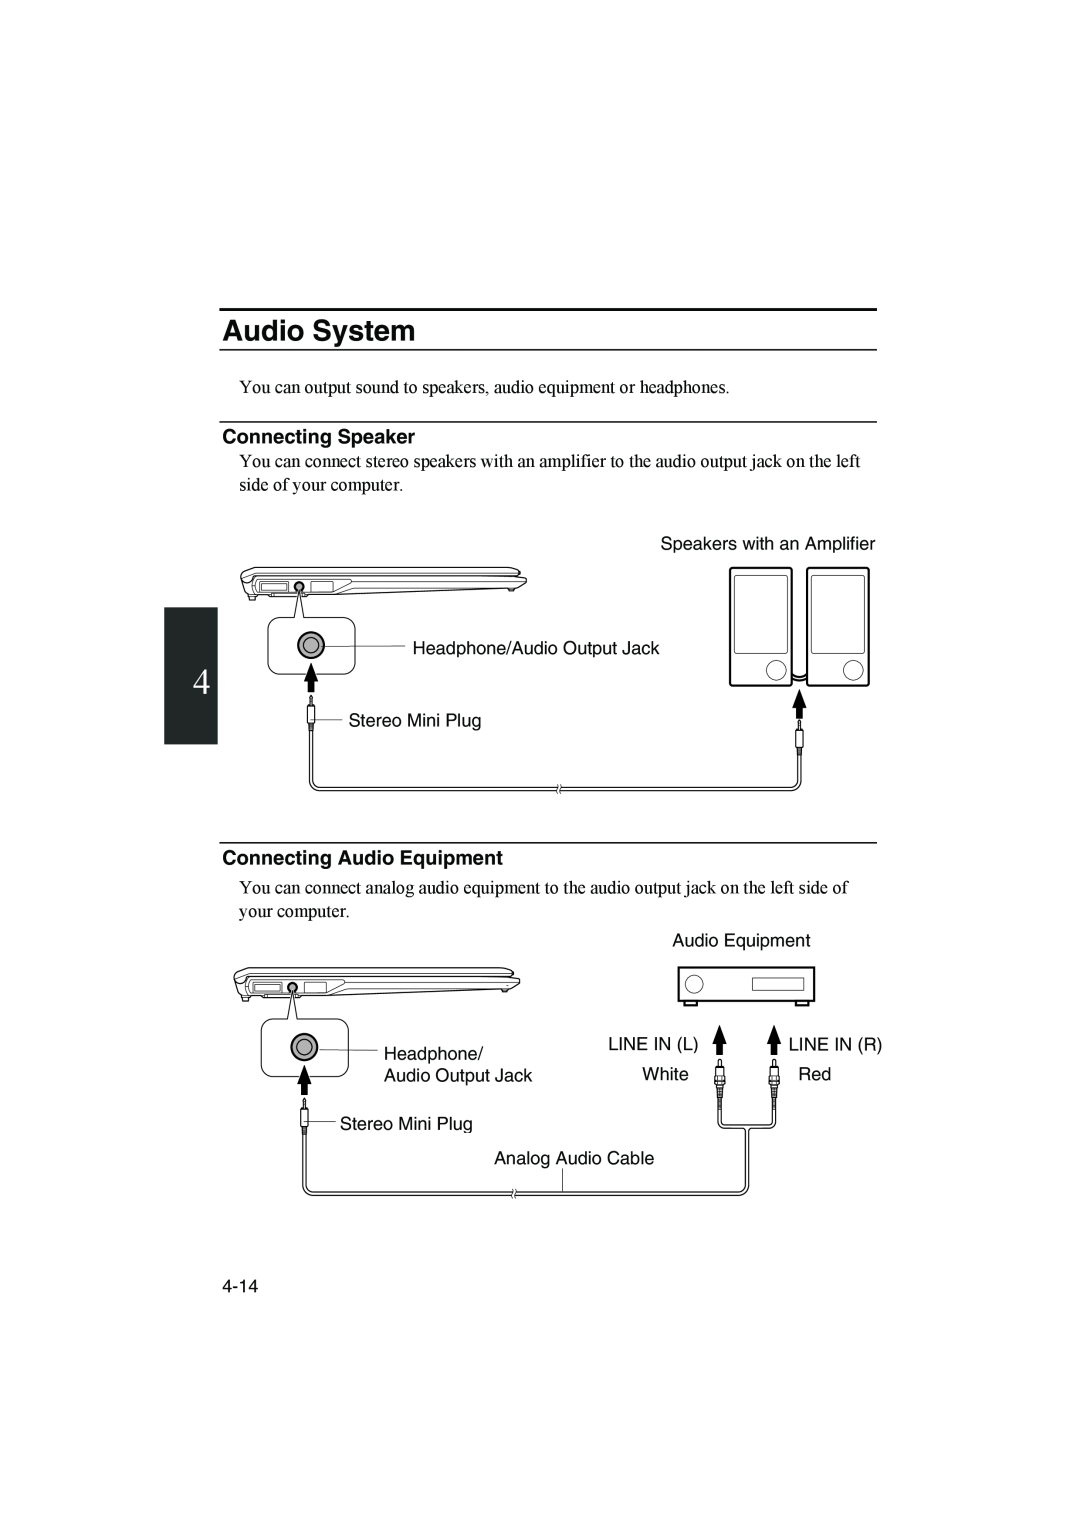 Sharp PC-MM1 manual Audio System, Connecting Speaker, Connecting Audio Equipment 